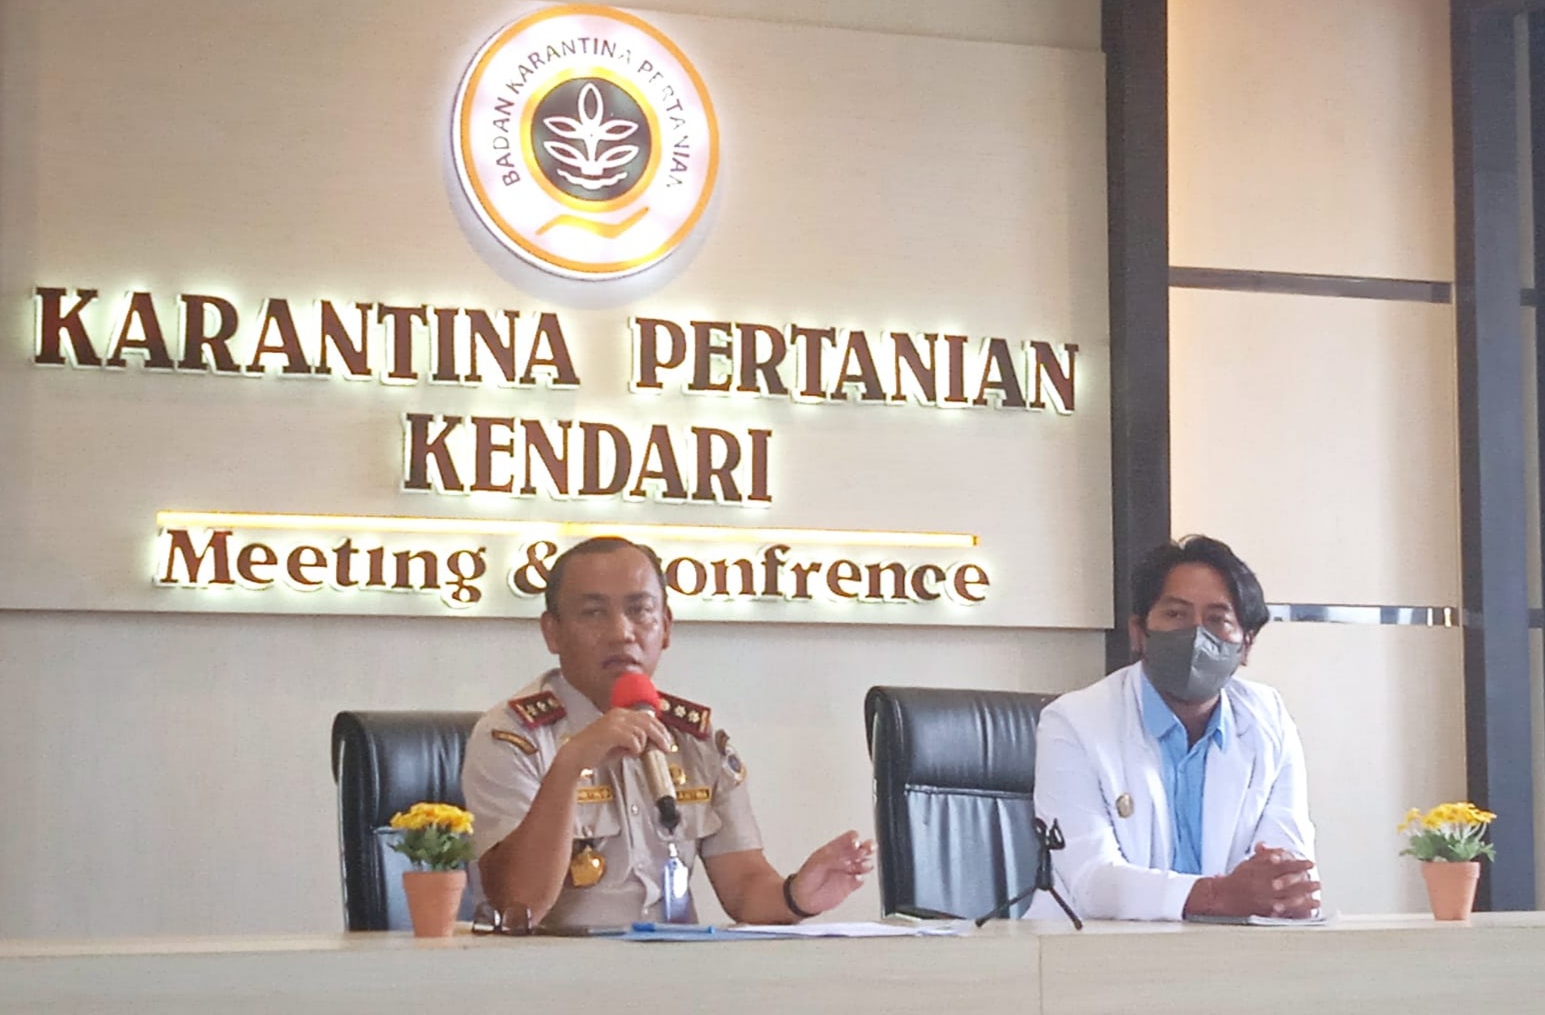 Kepala Balai Karantina Pertanian Kendari, N Prayatno Ginting bersama Dokter Hewan Drh. Putu Nara Kusuma. (Foto: Hasrul/SULTRAKINI.COM)